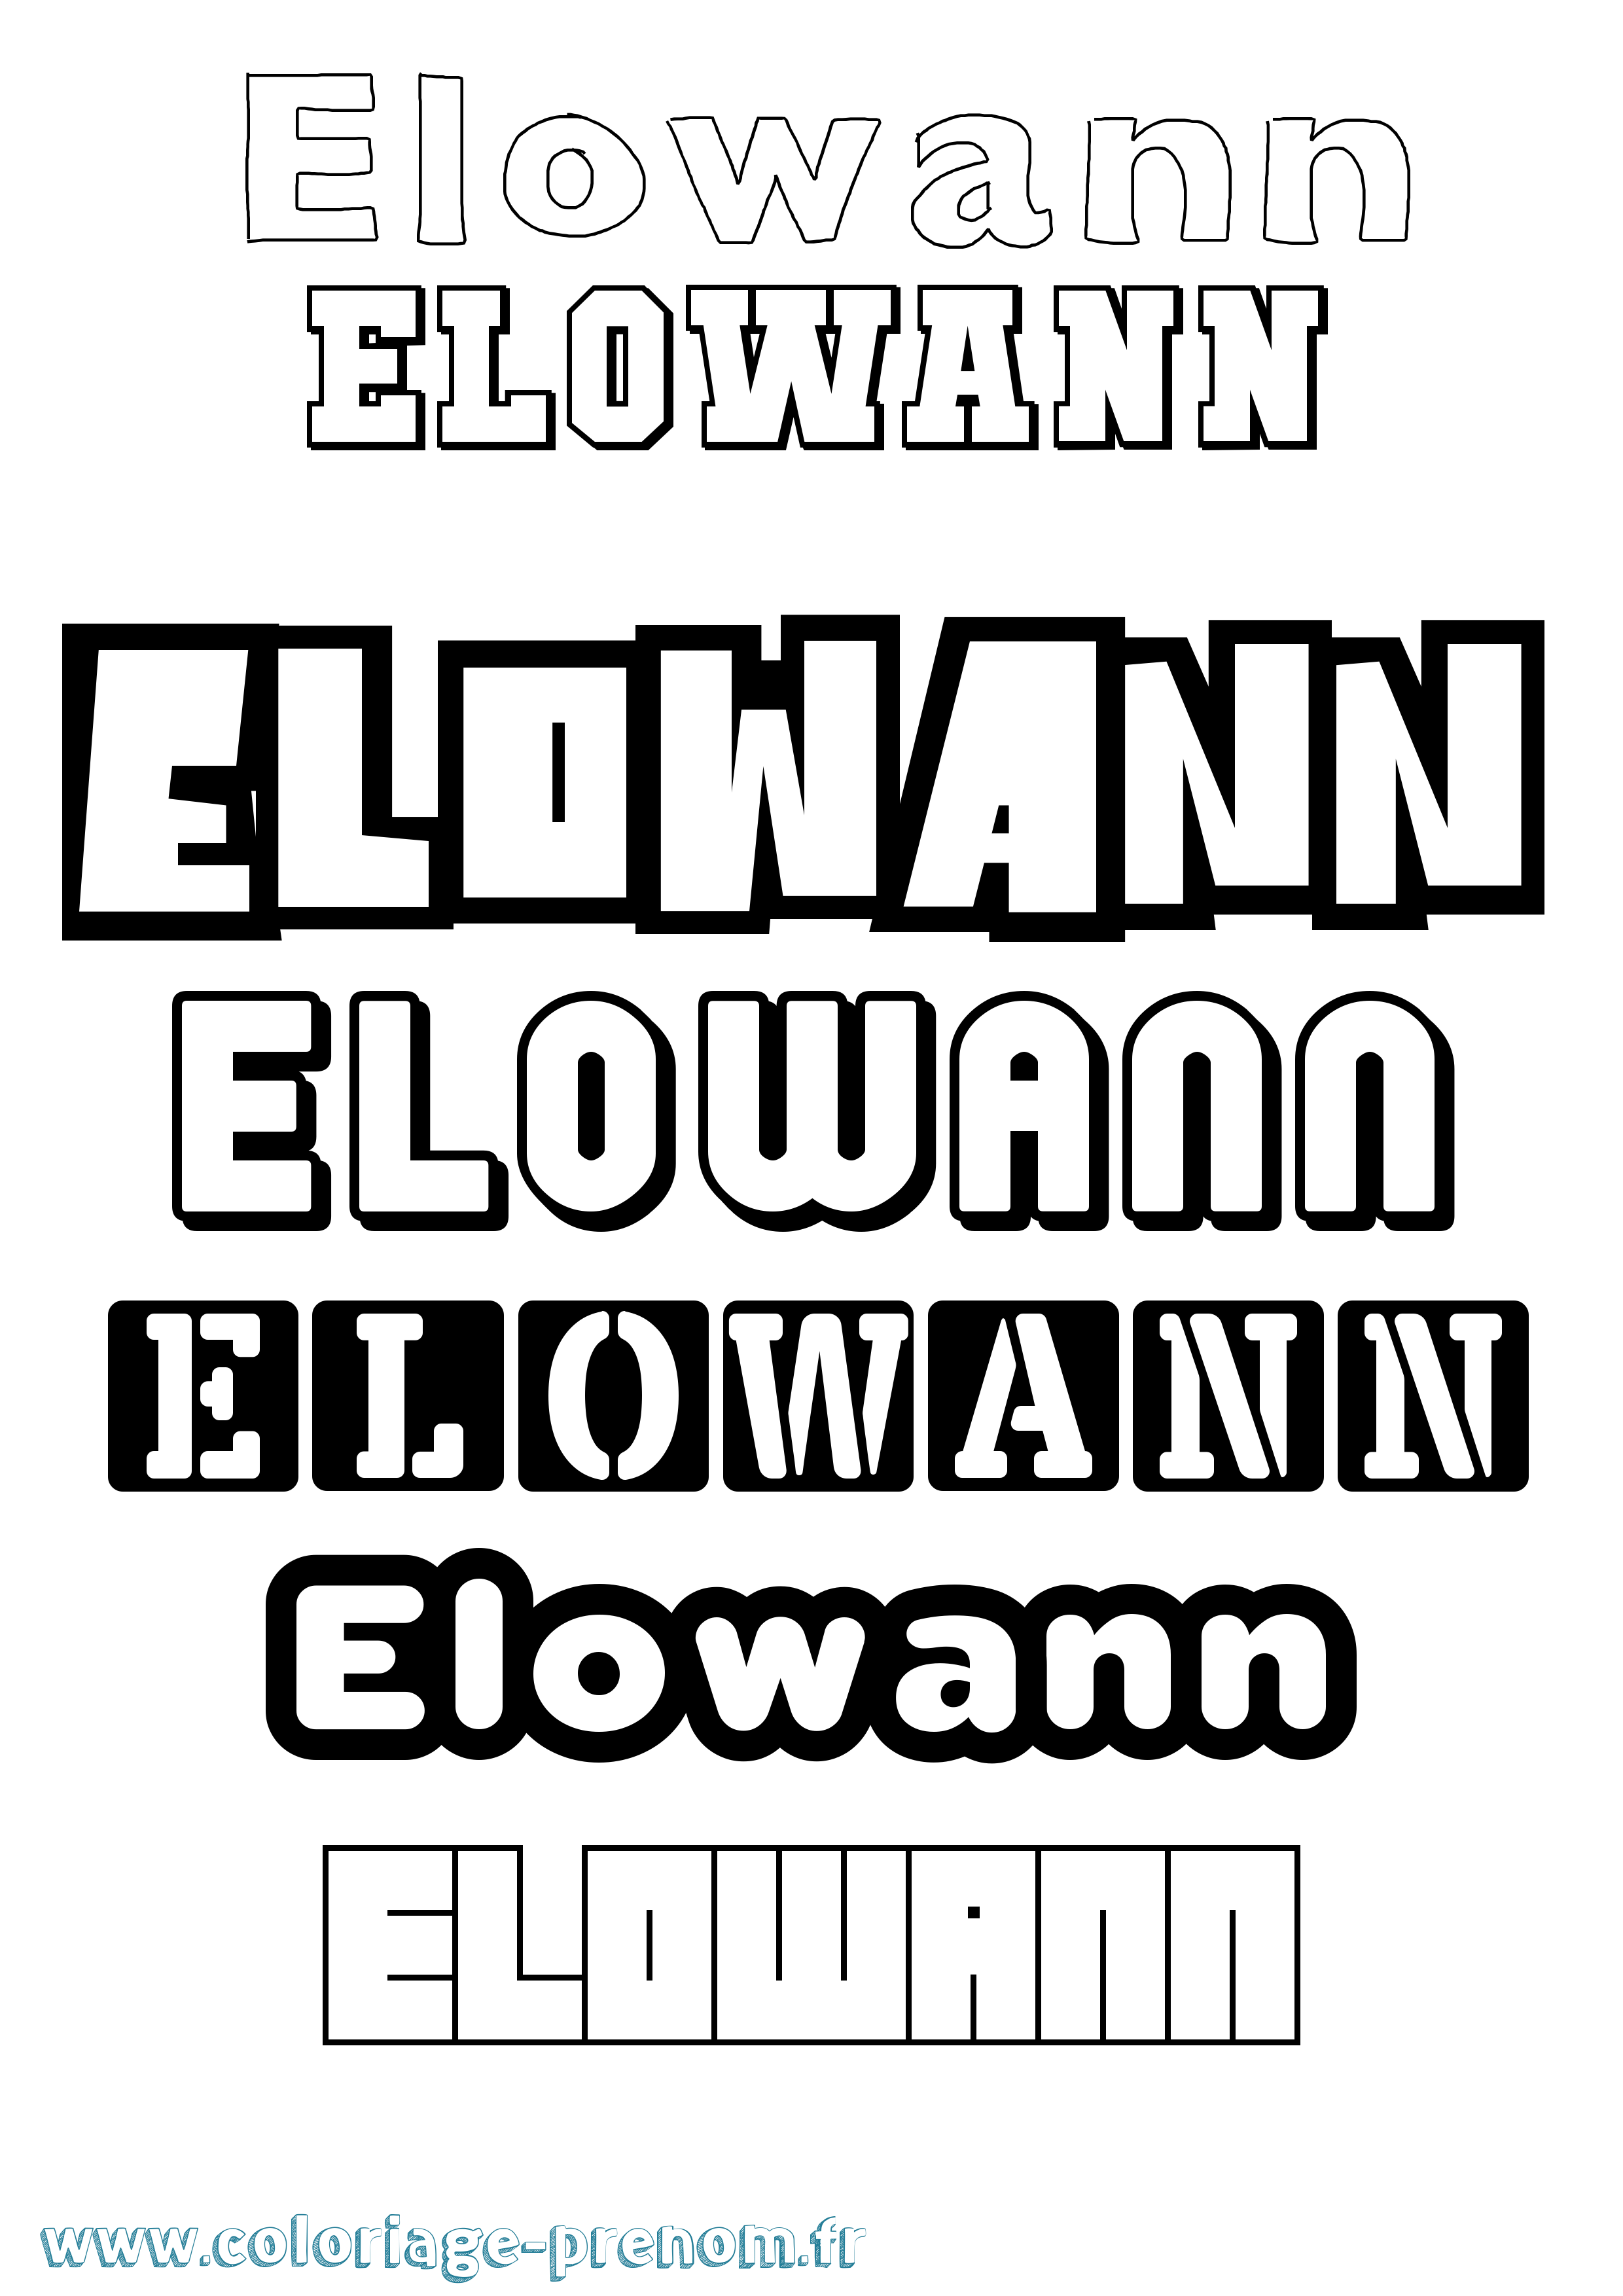 Coloriage prénom Elowann Simple